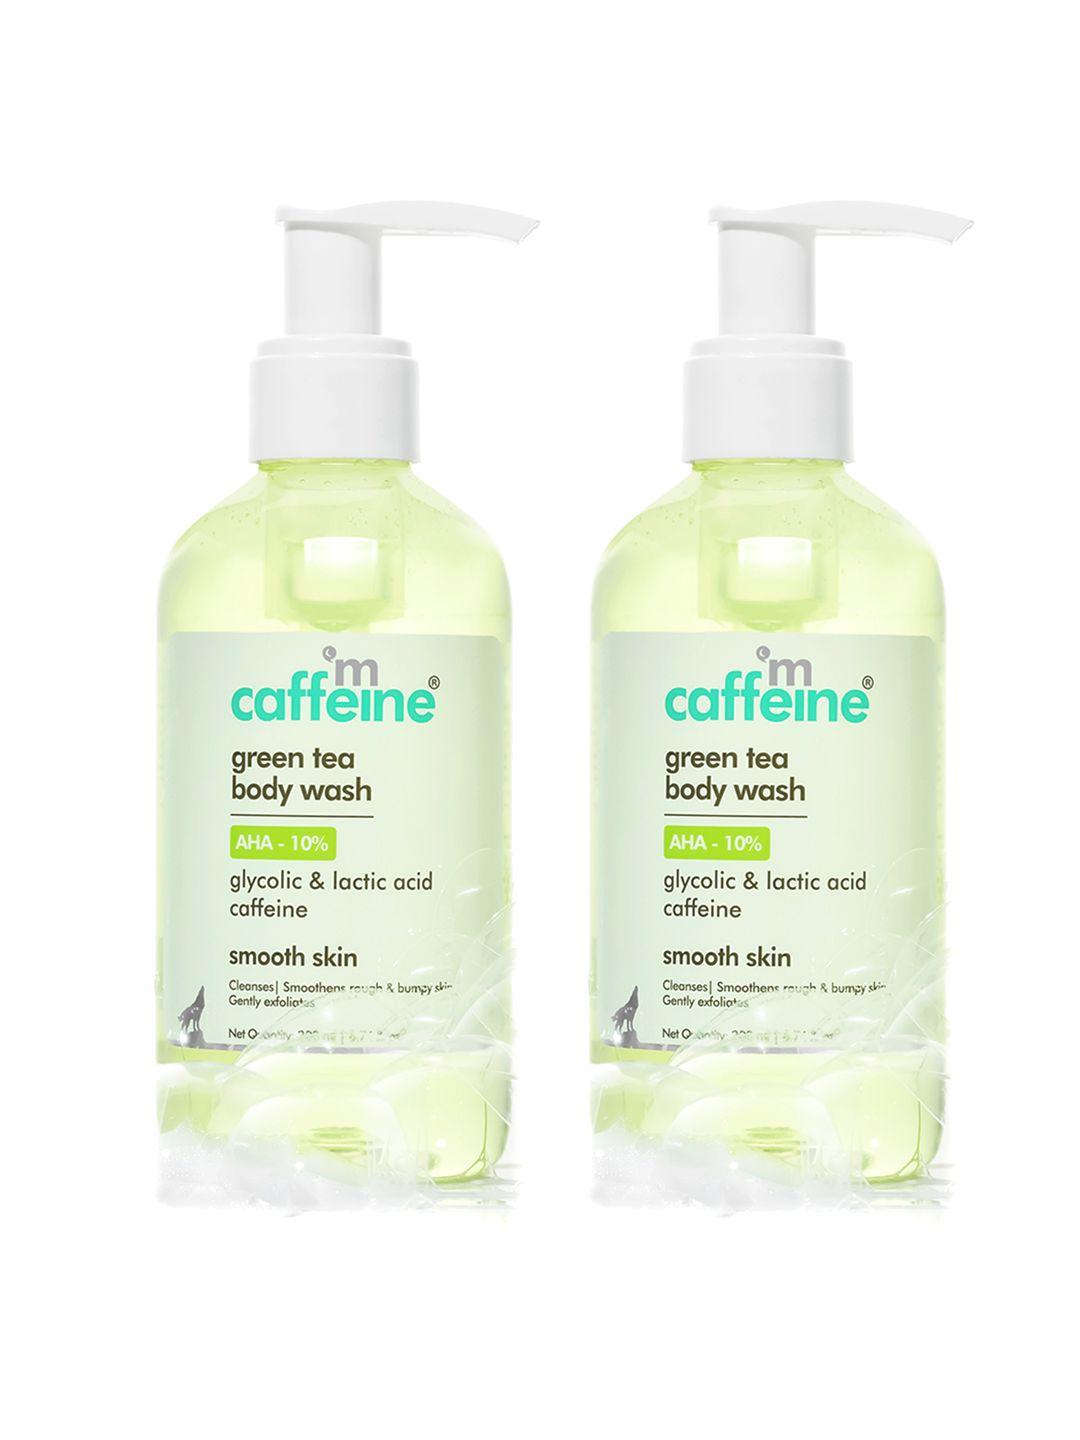 mcaffeine set of 2 green tea & 10% aha body wash for rough & bumpy skin - 200 ml each